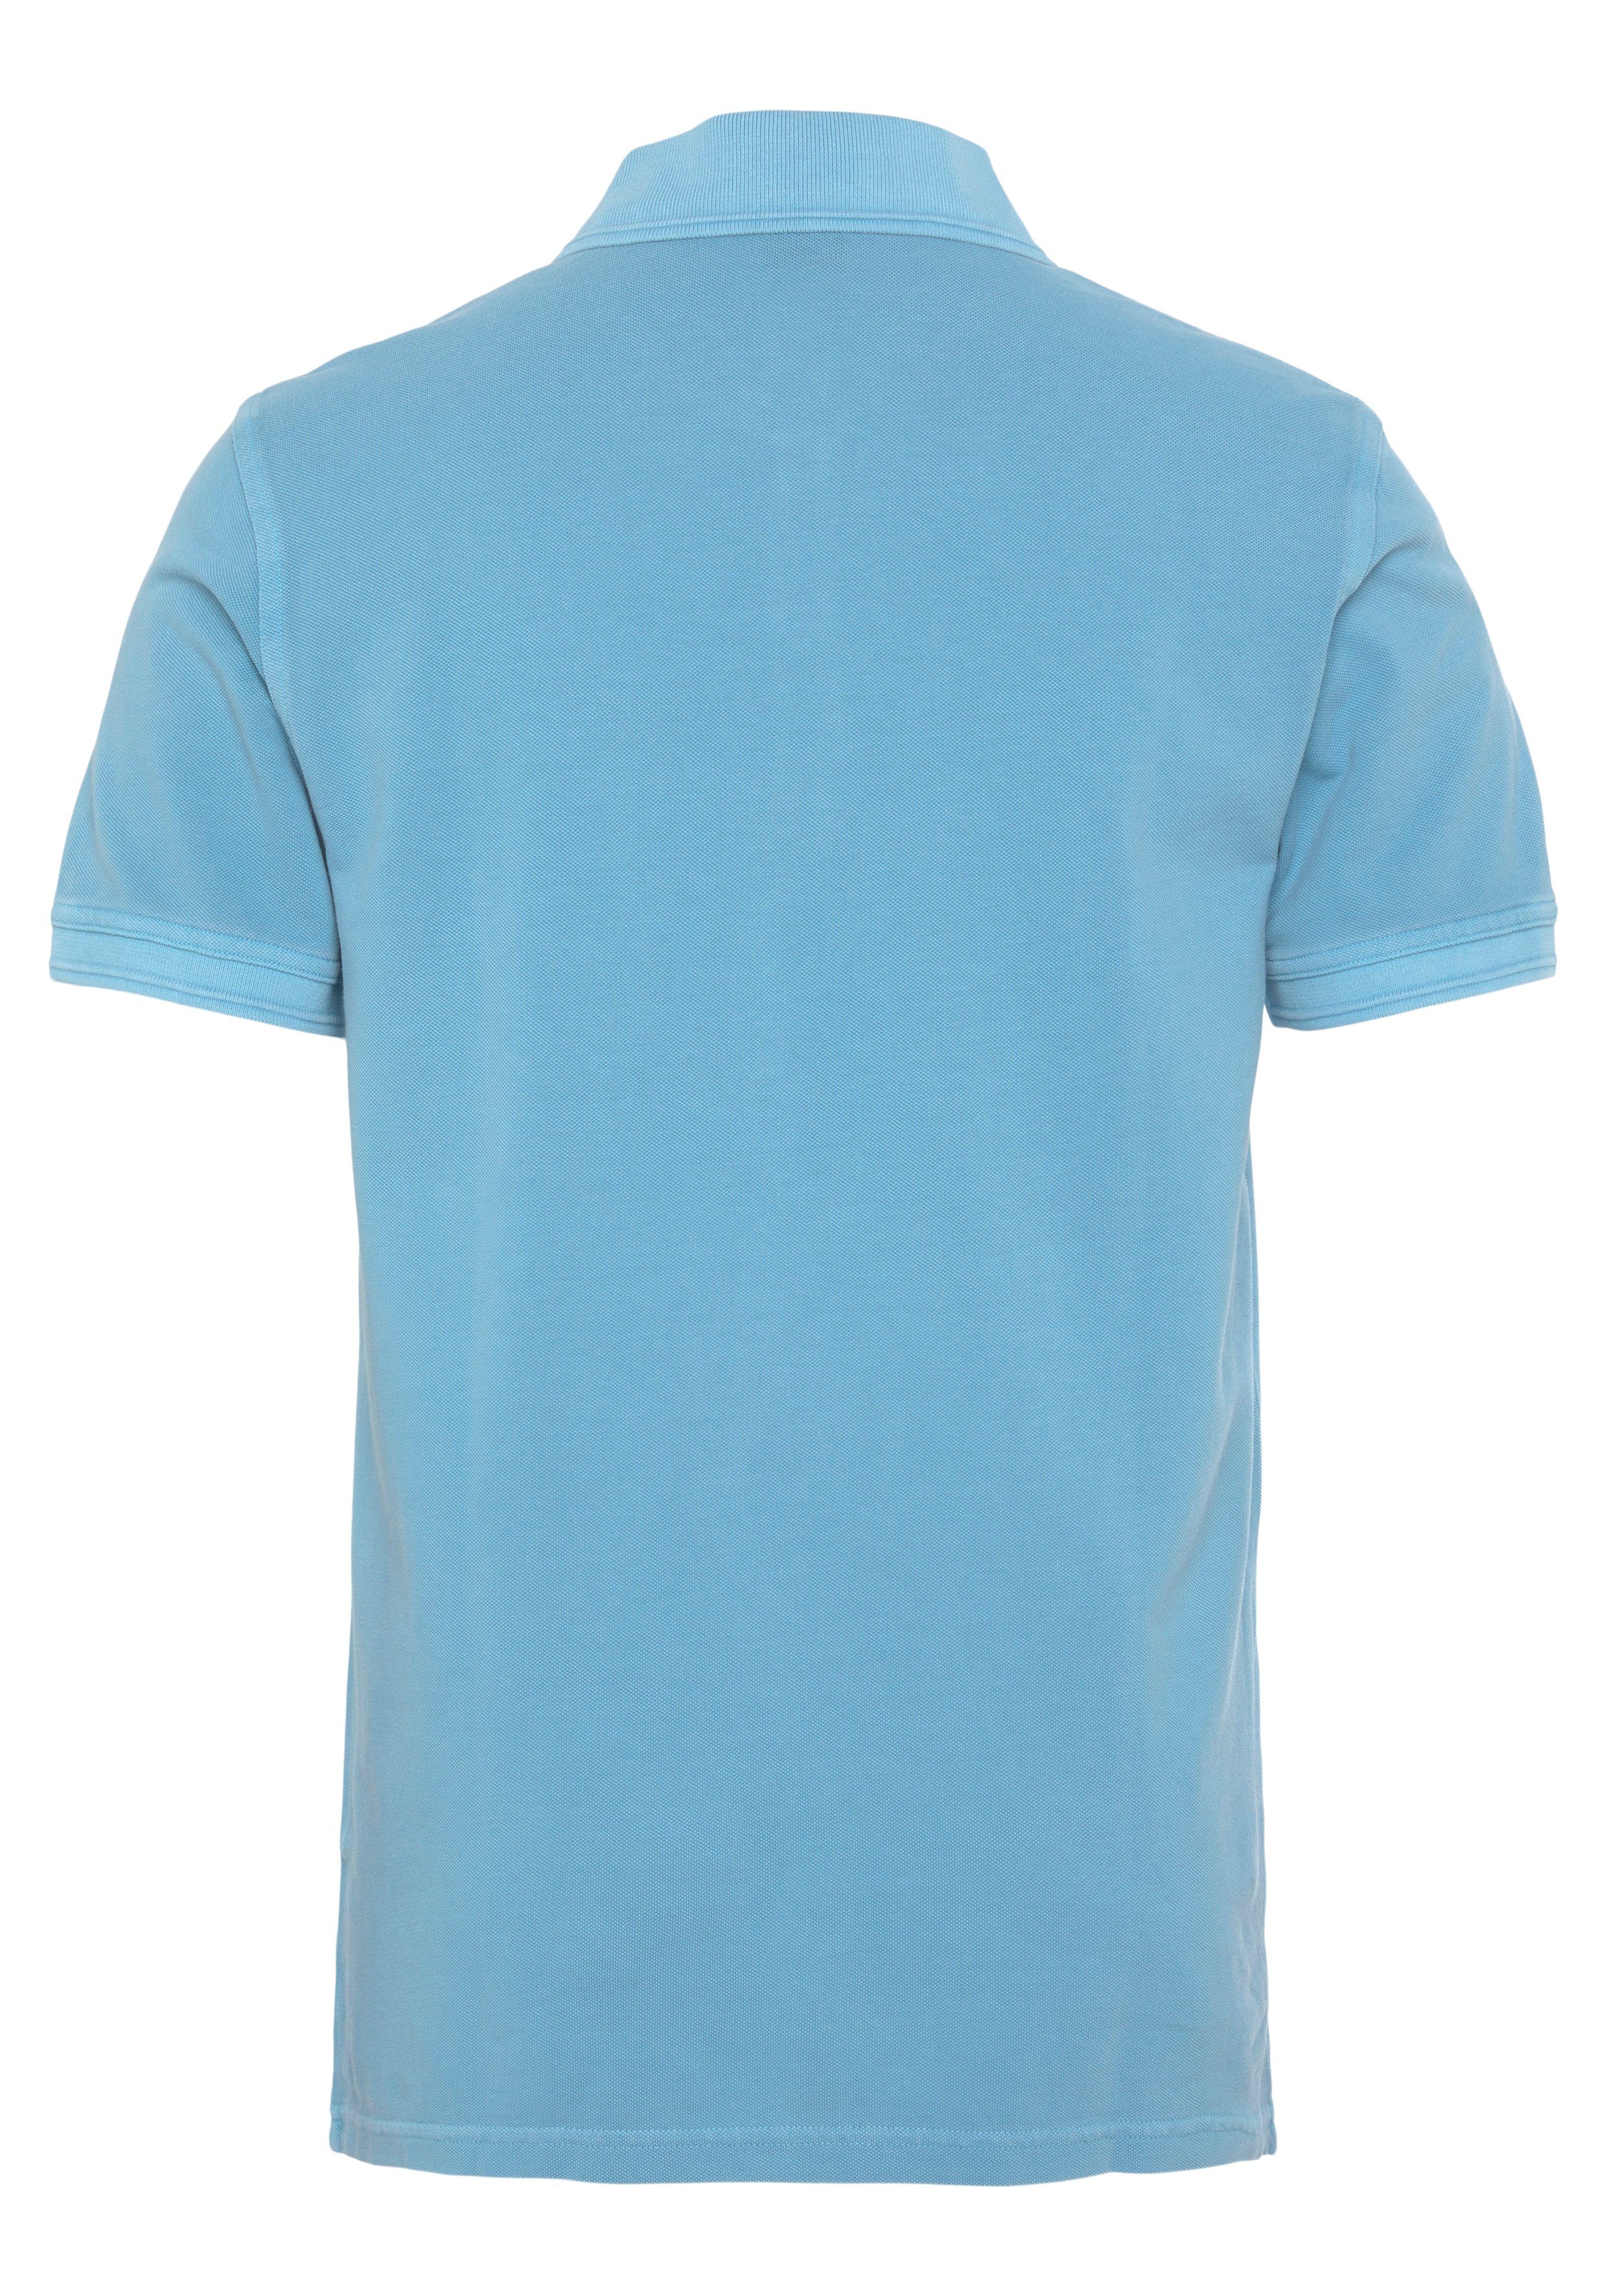 BOSS ORANGE Brust Poloshirt Logoschriftzug 01 mit auf Blue2 dezentem 10203439 Open der Prime